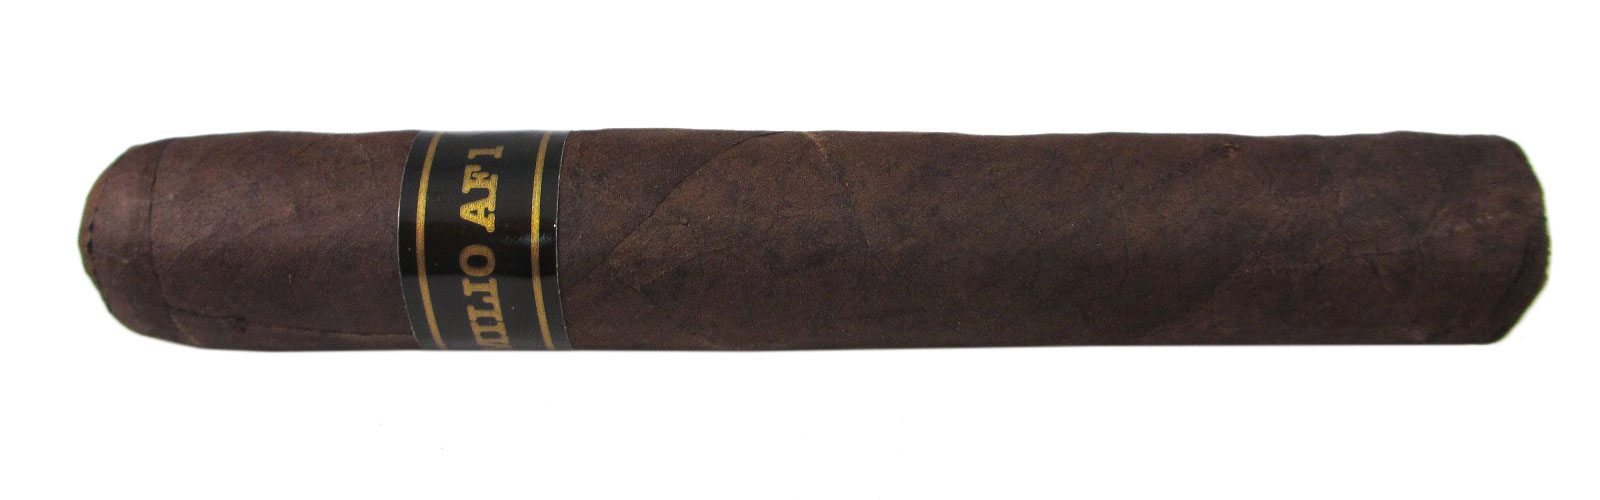 Blind Cigar Review: Emilio | AF1 Gran Toro